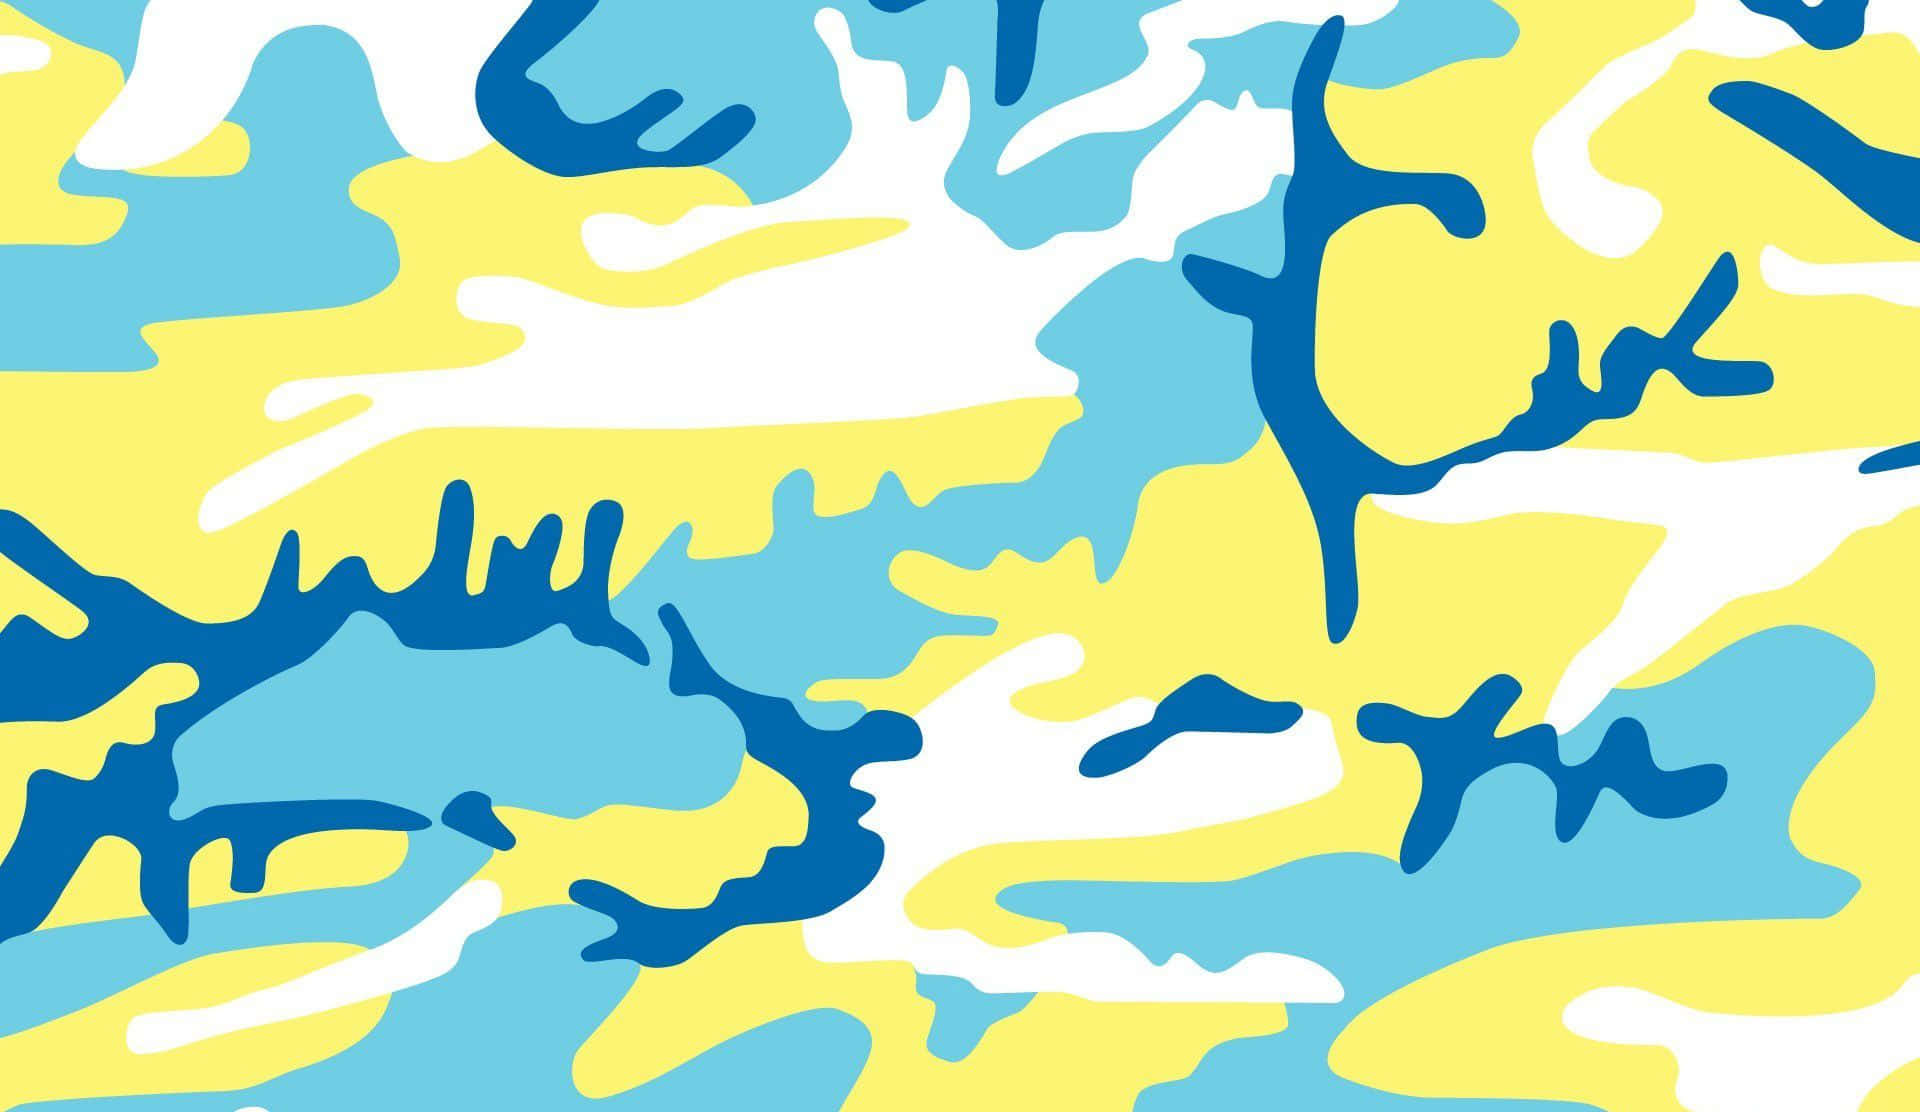 100+] Blue Bape Camo Wallpapers